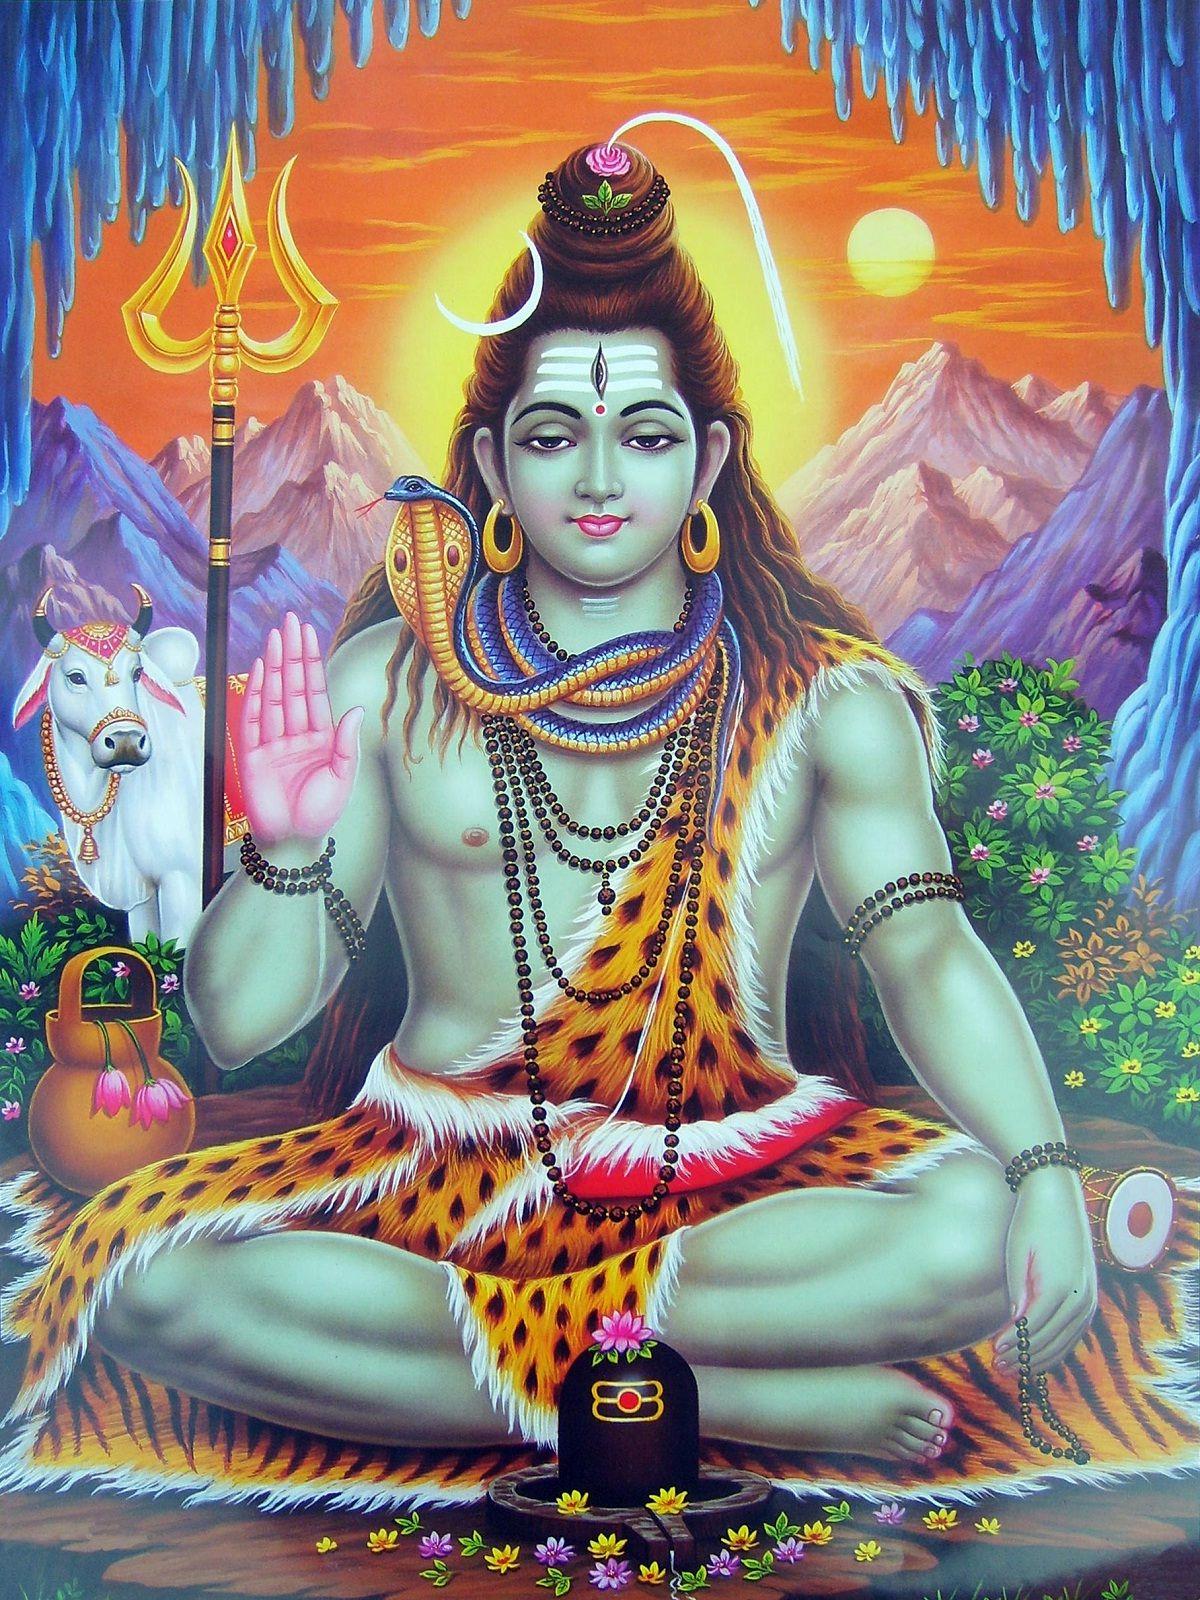 Lord Shiva mobile wallpaper and image. HD Wallpaper Rocks